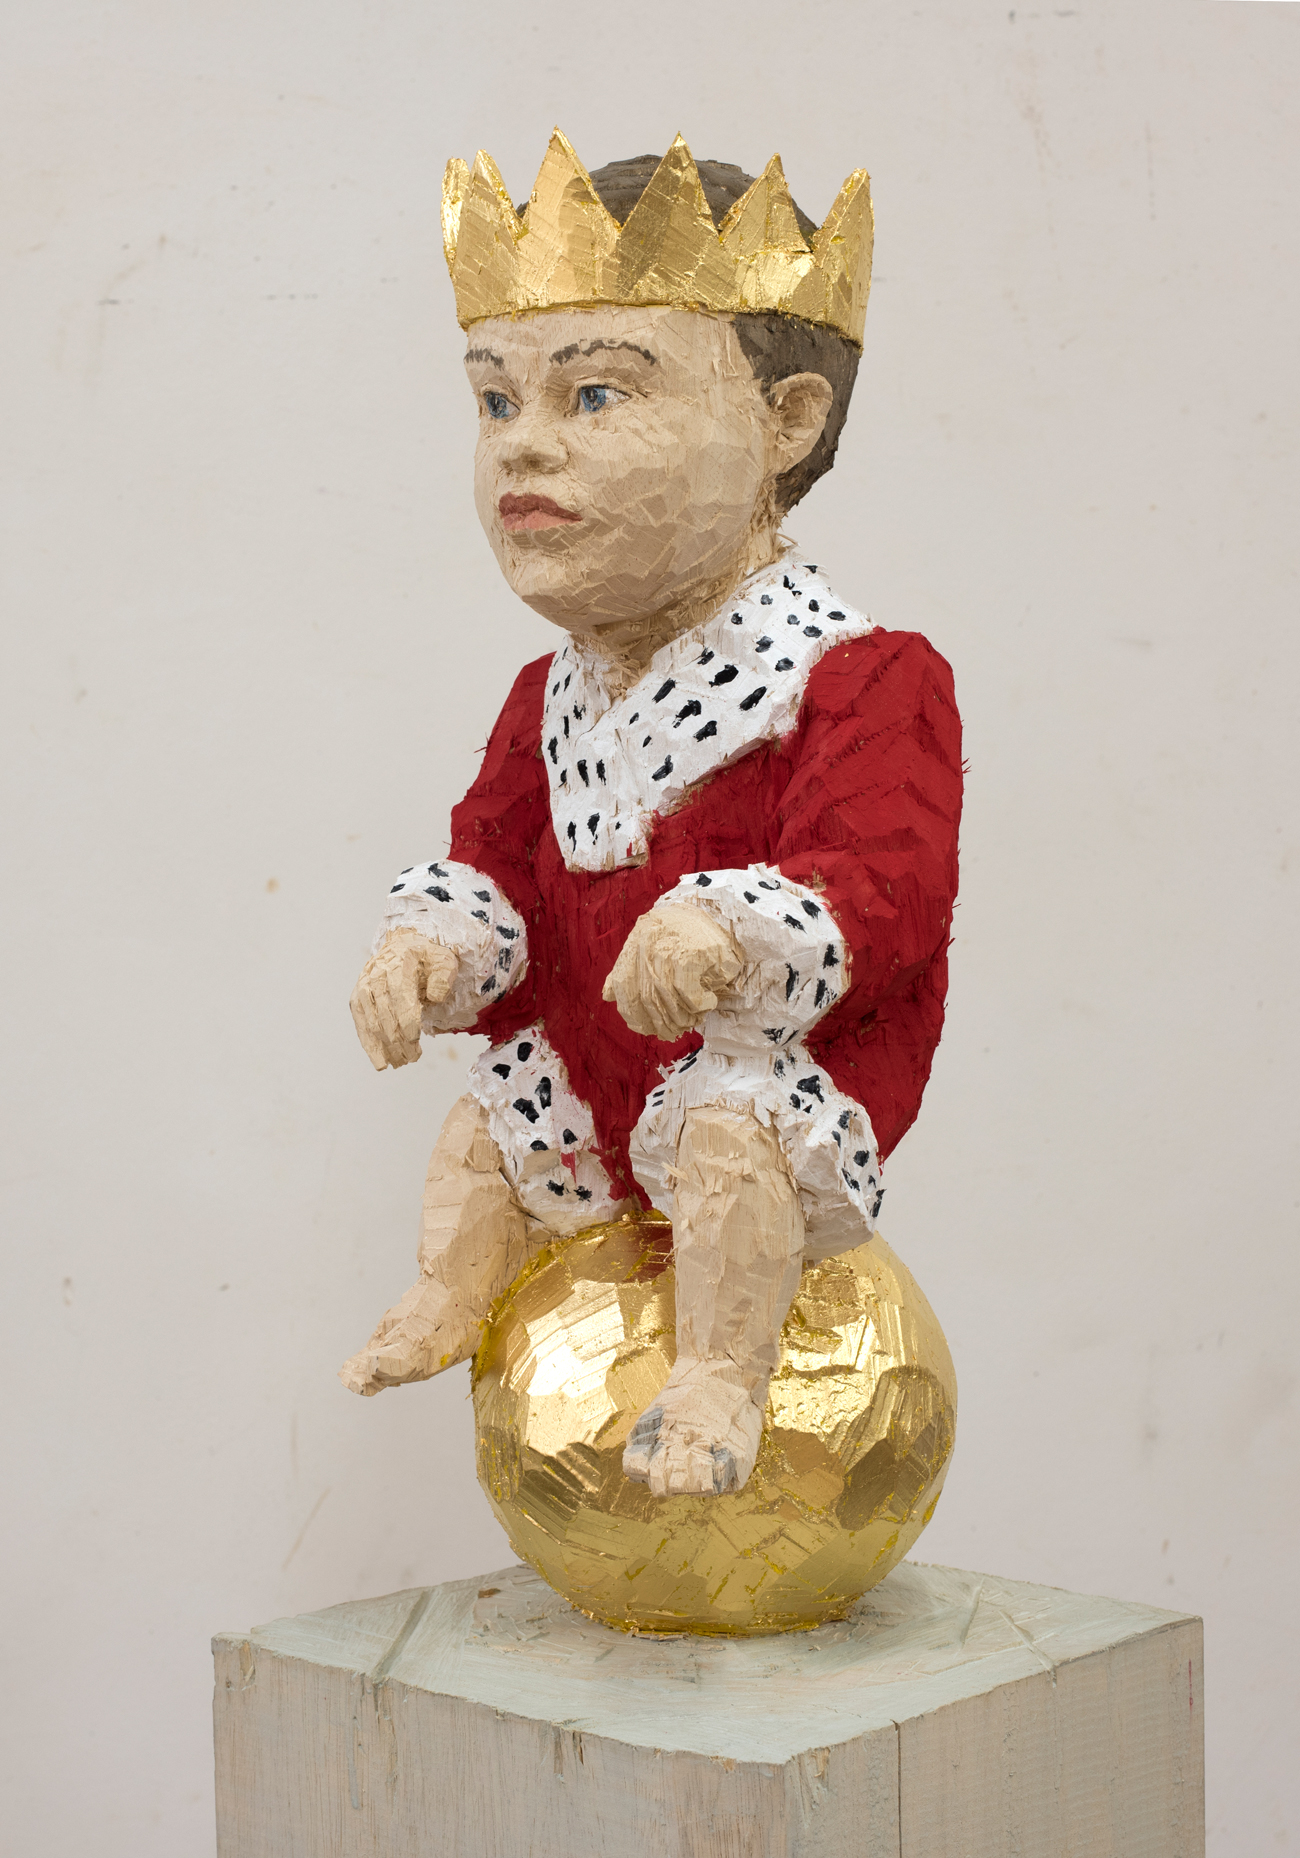 Babyking. Wawa wood, coloured Height of figure 53 cmCourtesy Galerie Forsblom, Helsinki (Finland) / Stephan Balkenhol